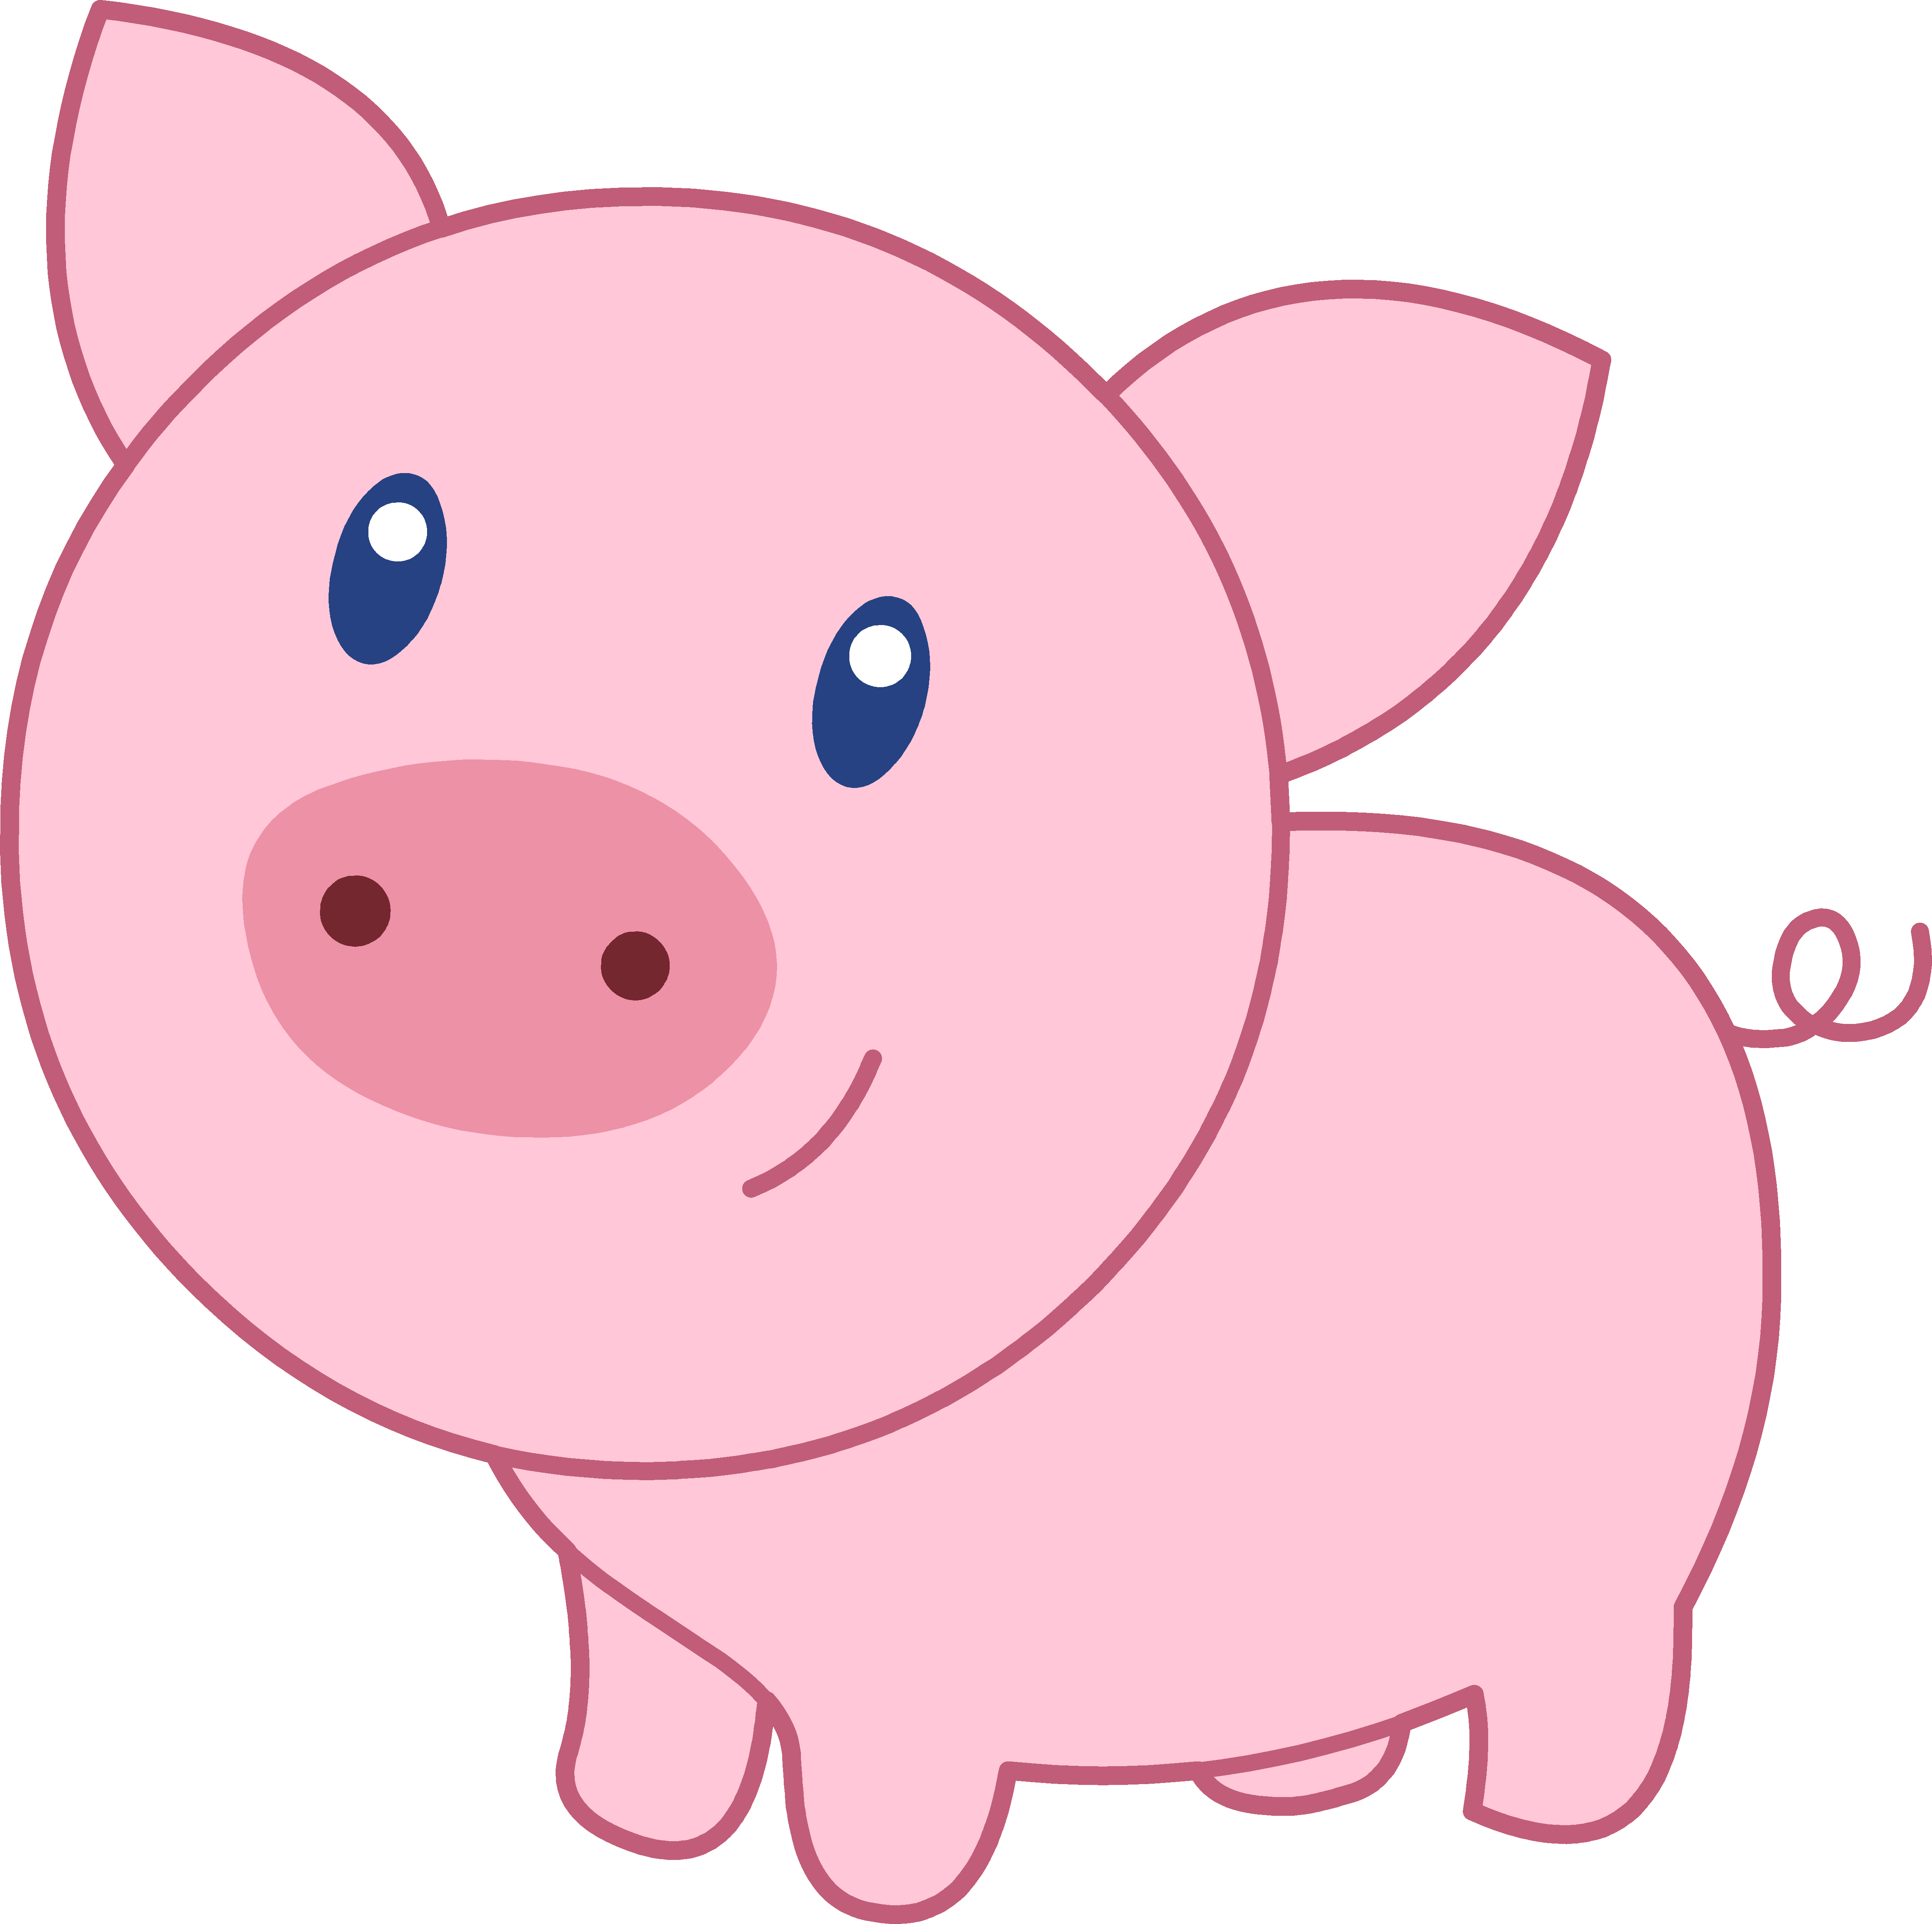 Cute pig face clip art free c